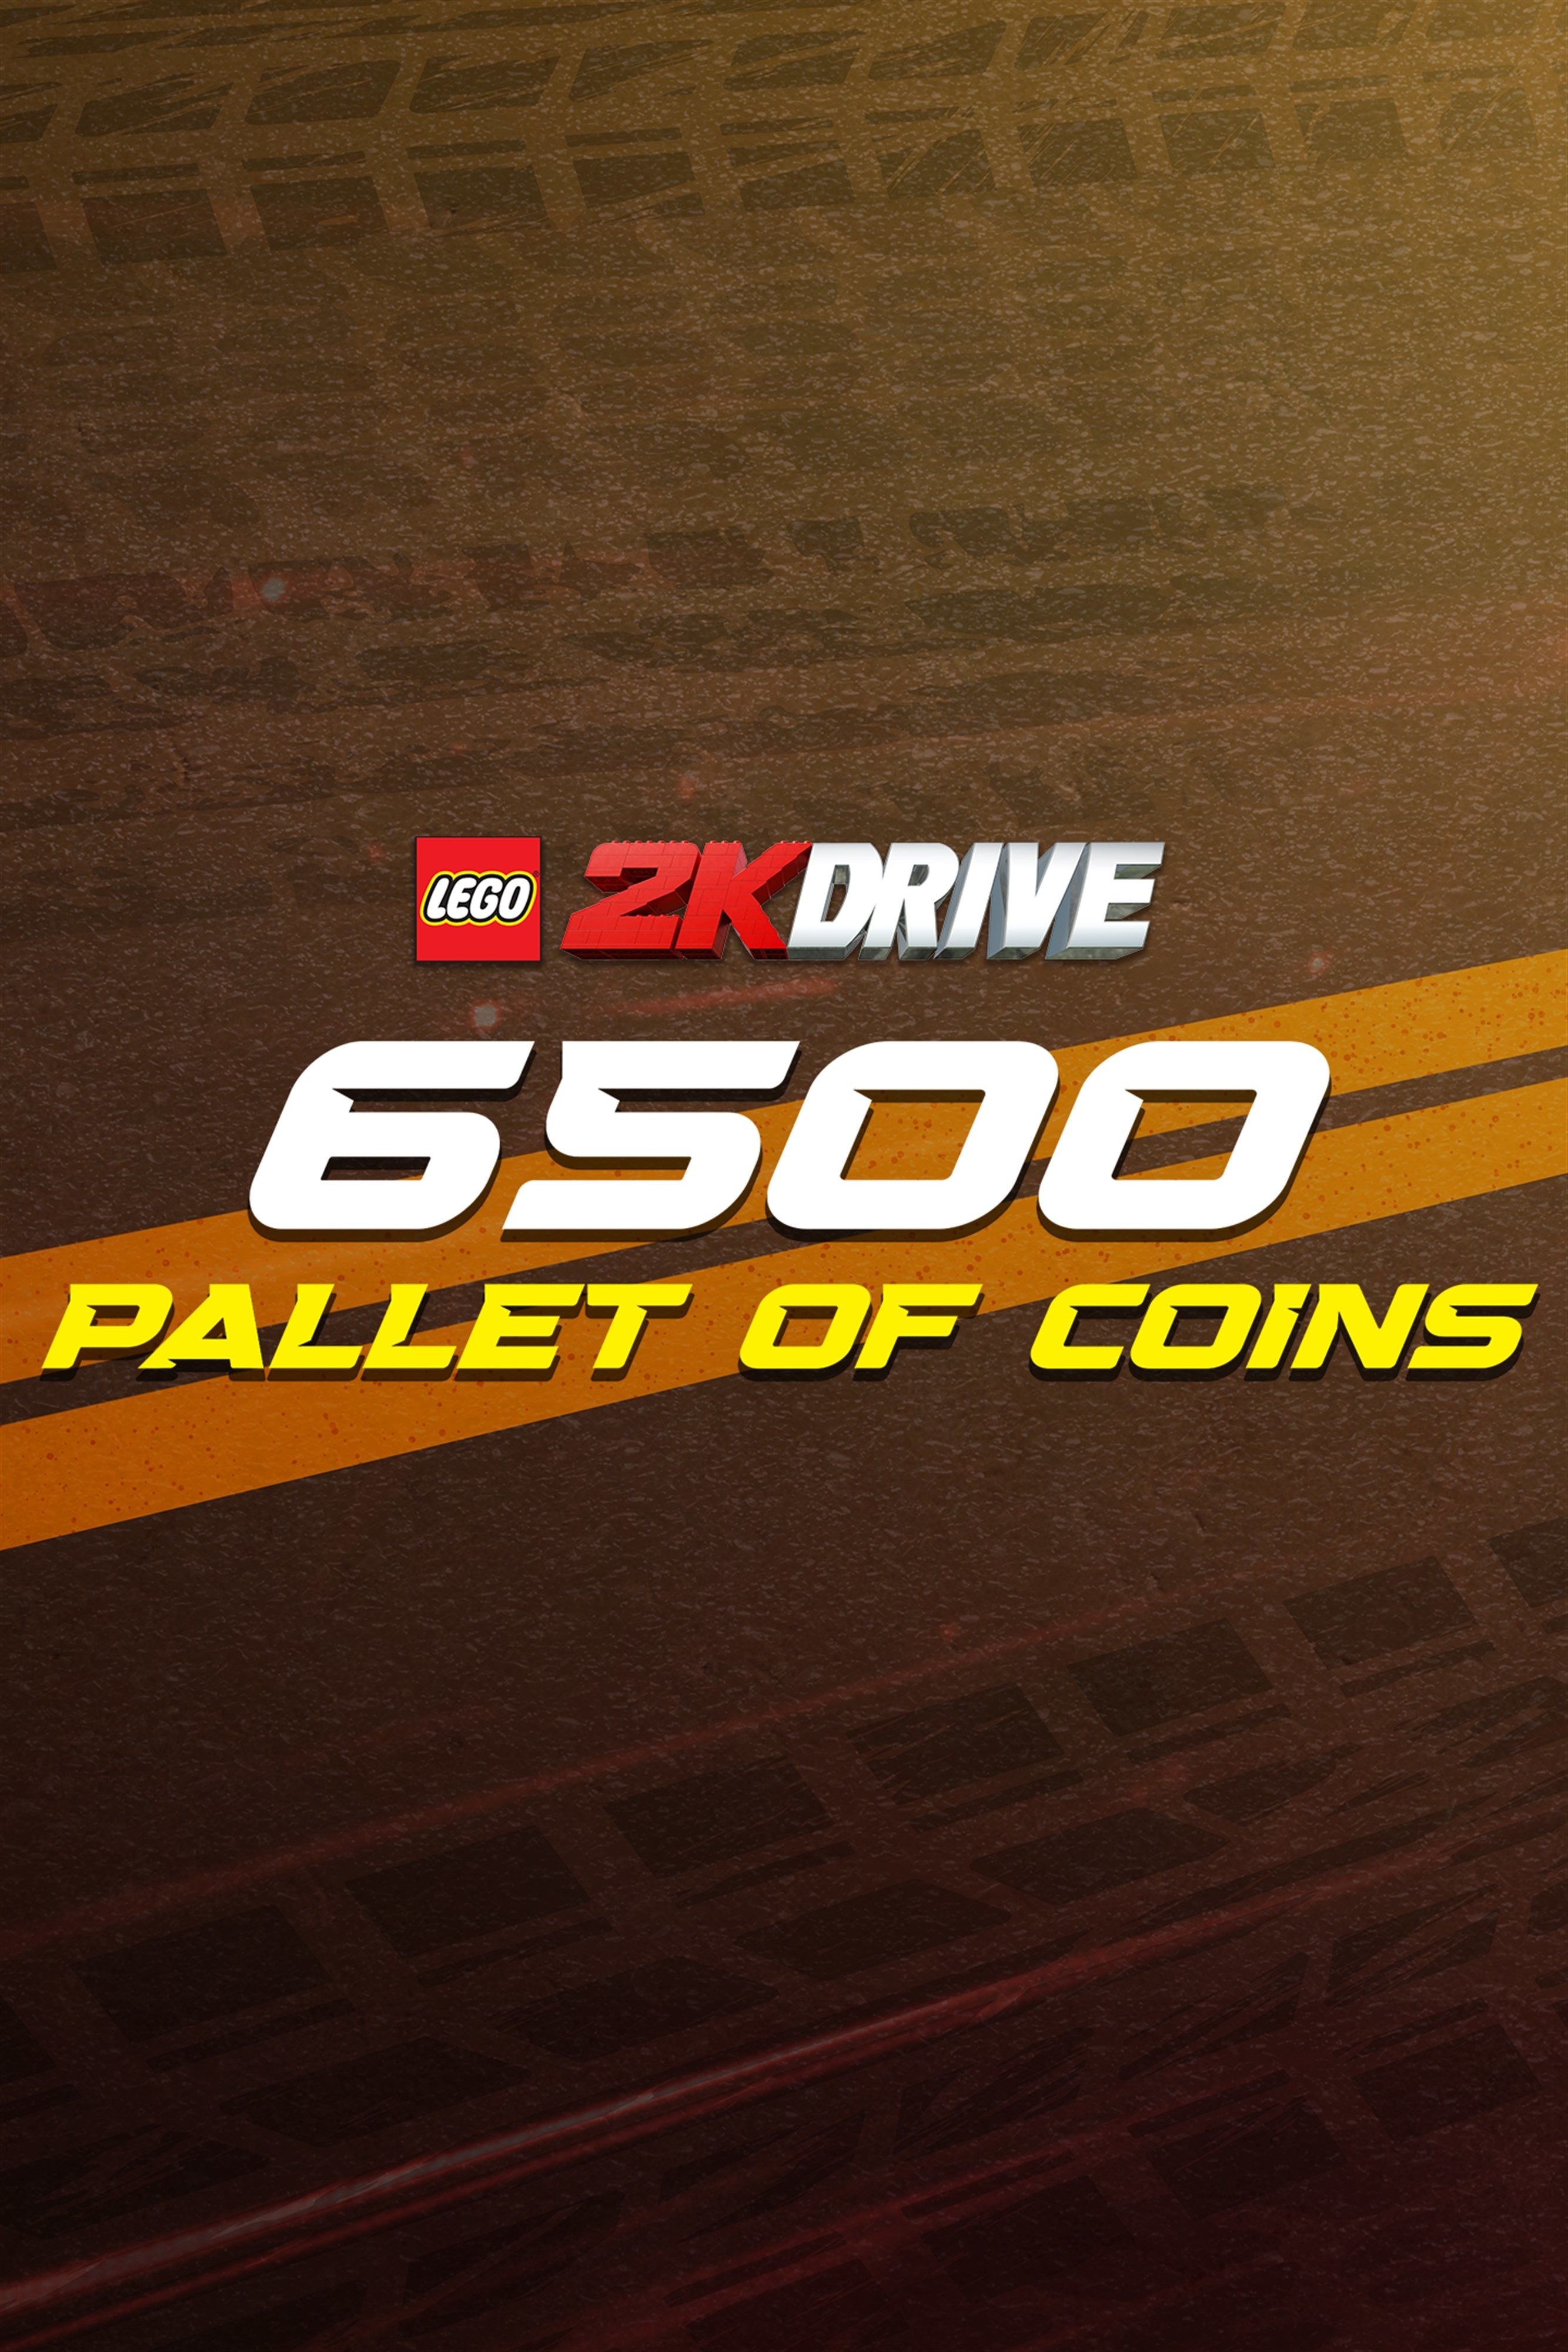 Xbox LEGO 2K Drive Pallet of Coins Download Code (Xbox) zum Sofortdownload